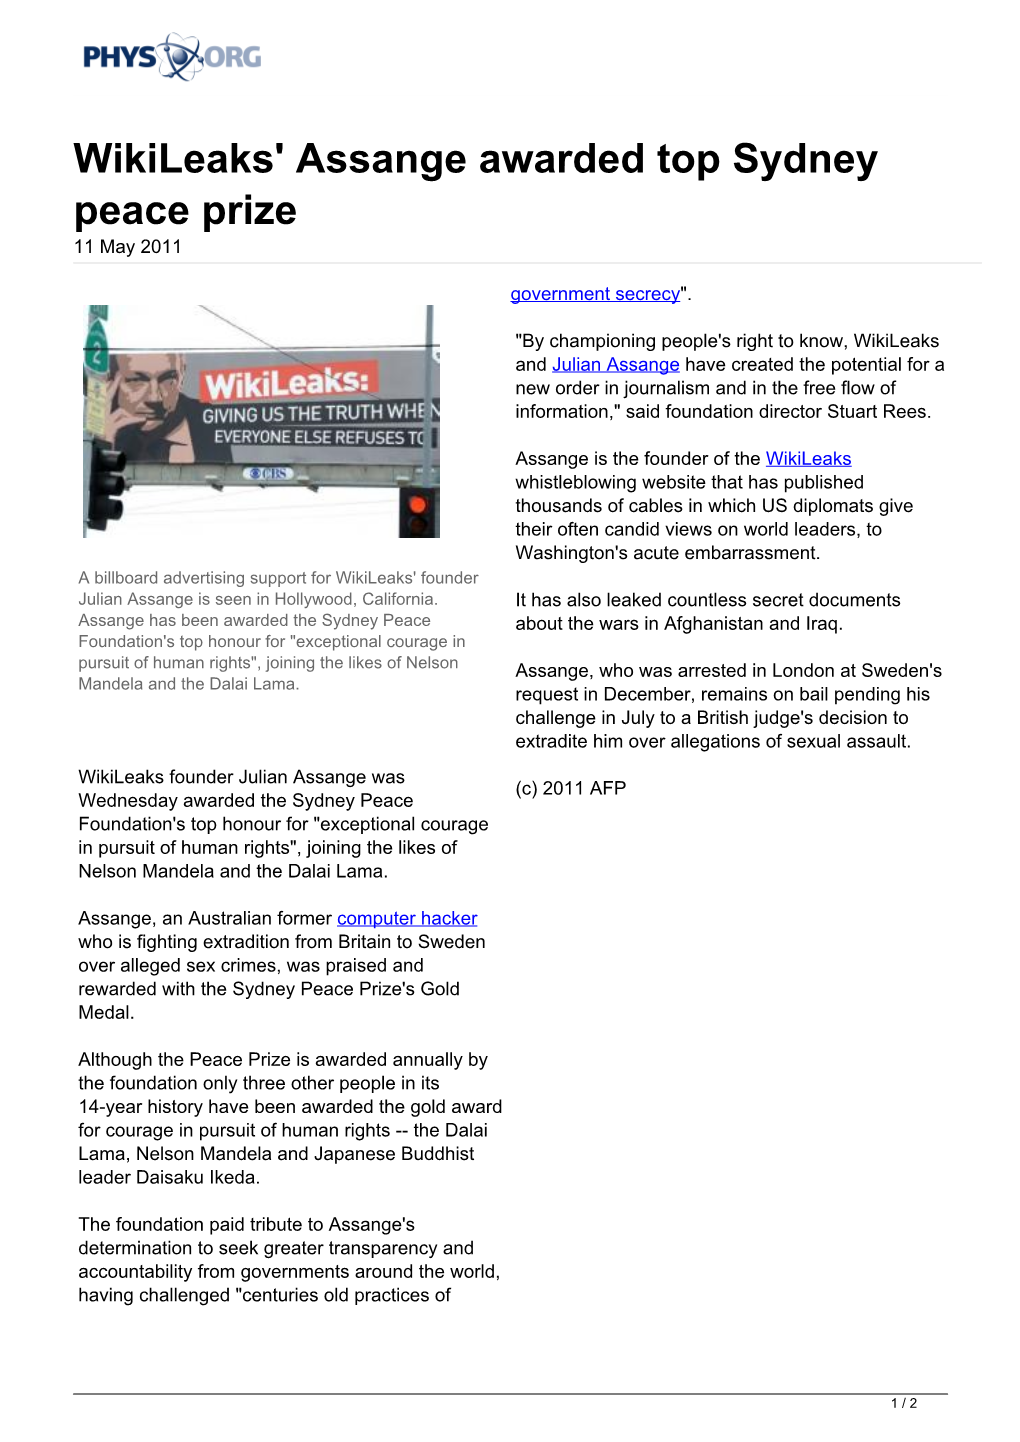 Wikileaks' Assange Awarded Top Sydney Peace Prize 11 May 2011